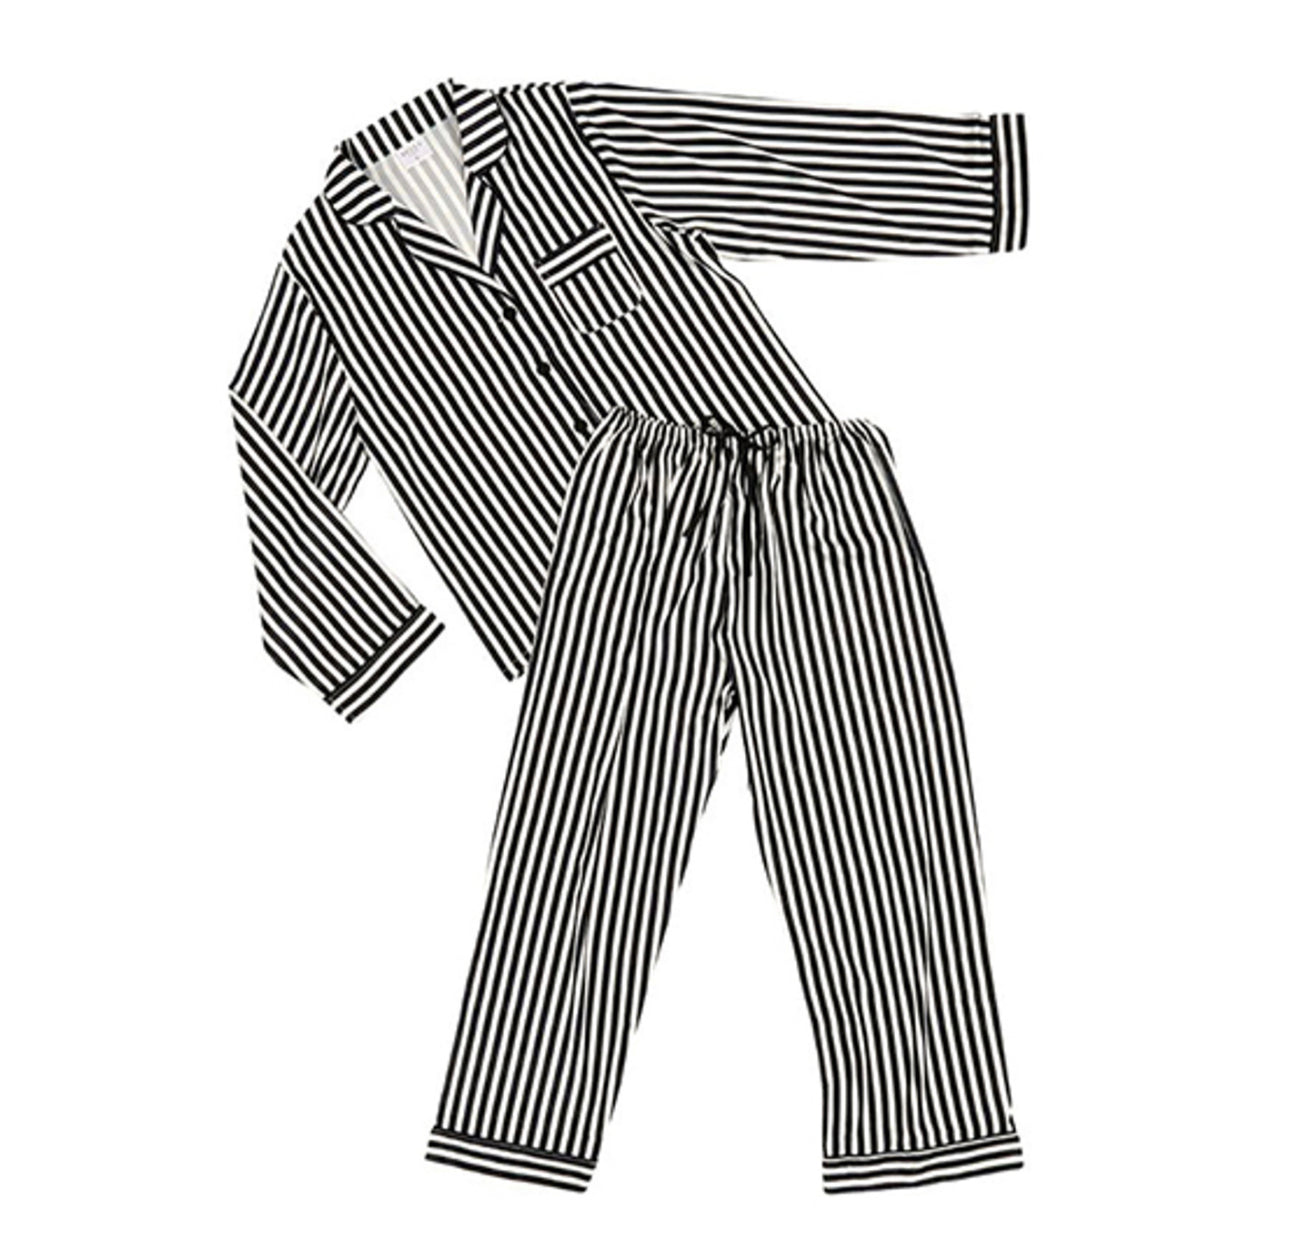 Striped Full-Length PJ sets